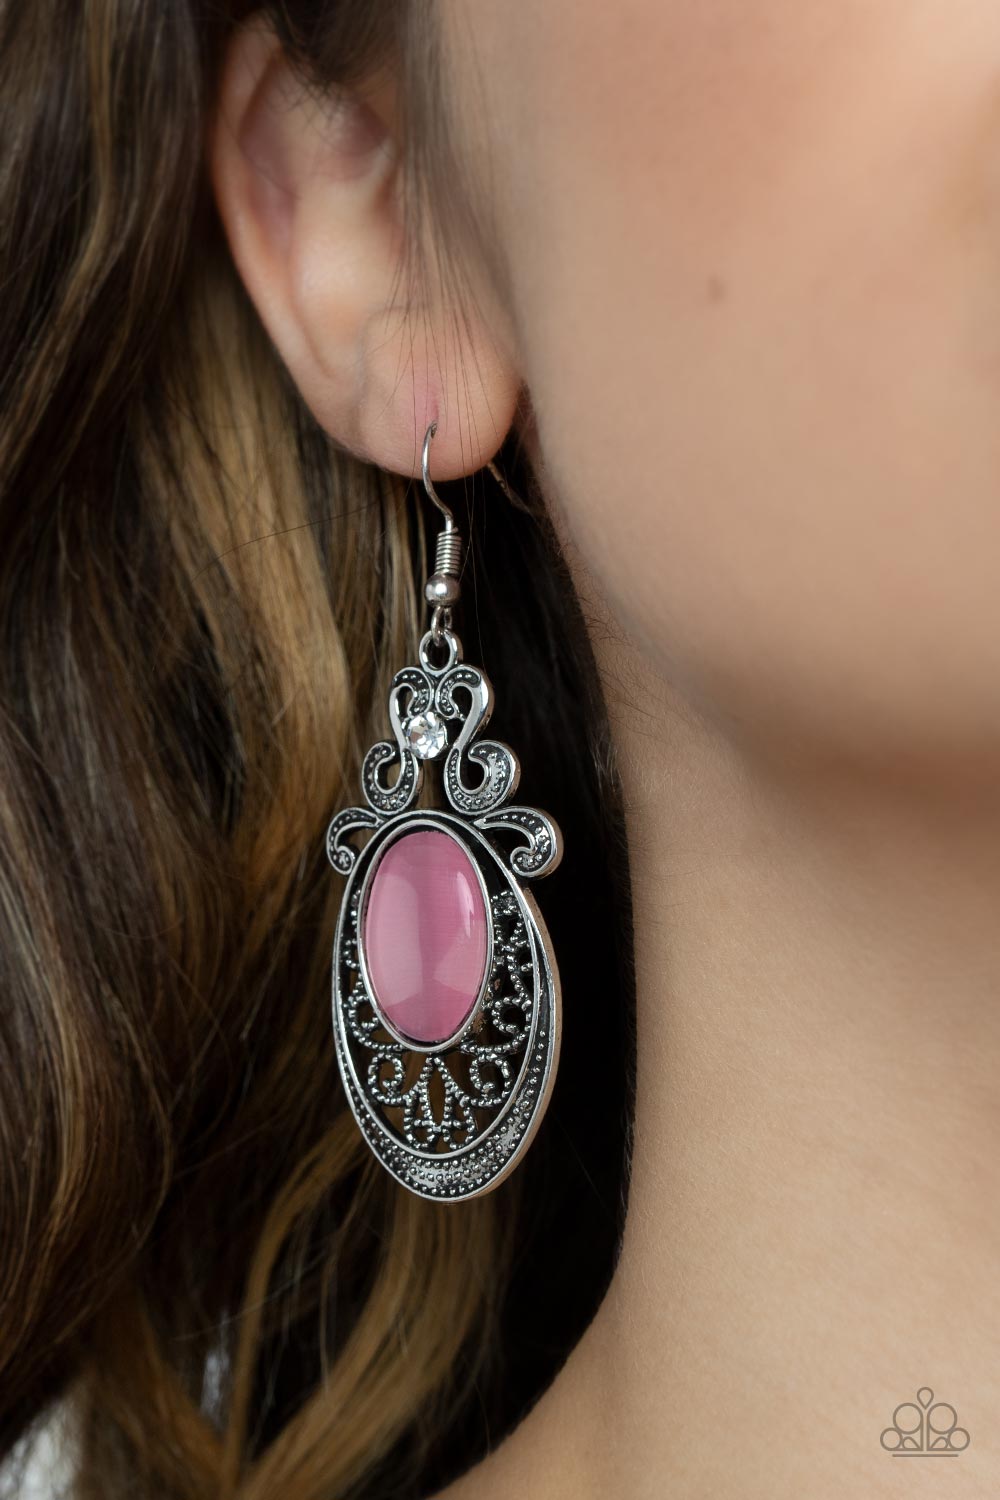 Garden Gondola Ride Pink Cat's Eye Stone Earrings - Paparazzi Accessories- lightbox - CarasShop.com - $5 Jewelry by Cara Jewels